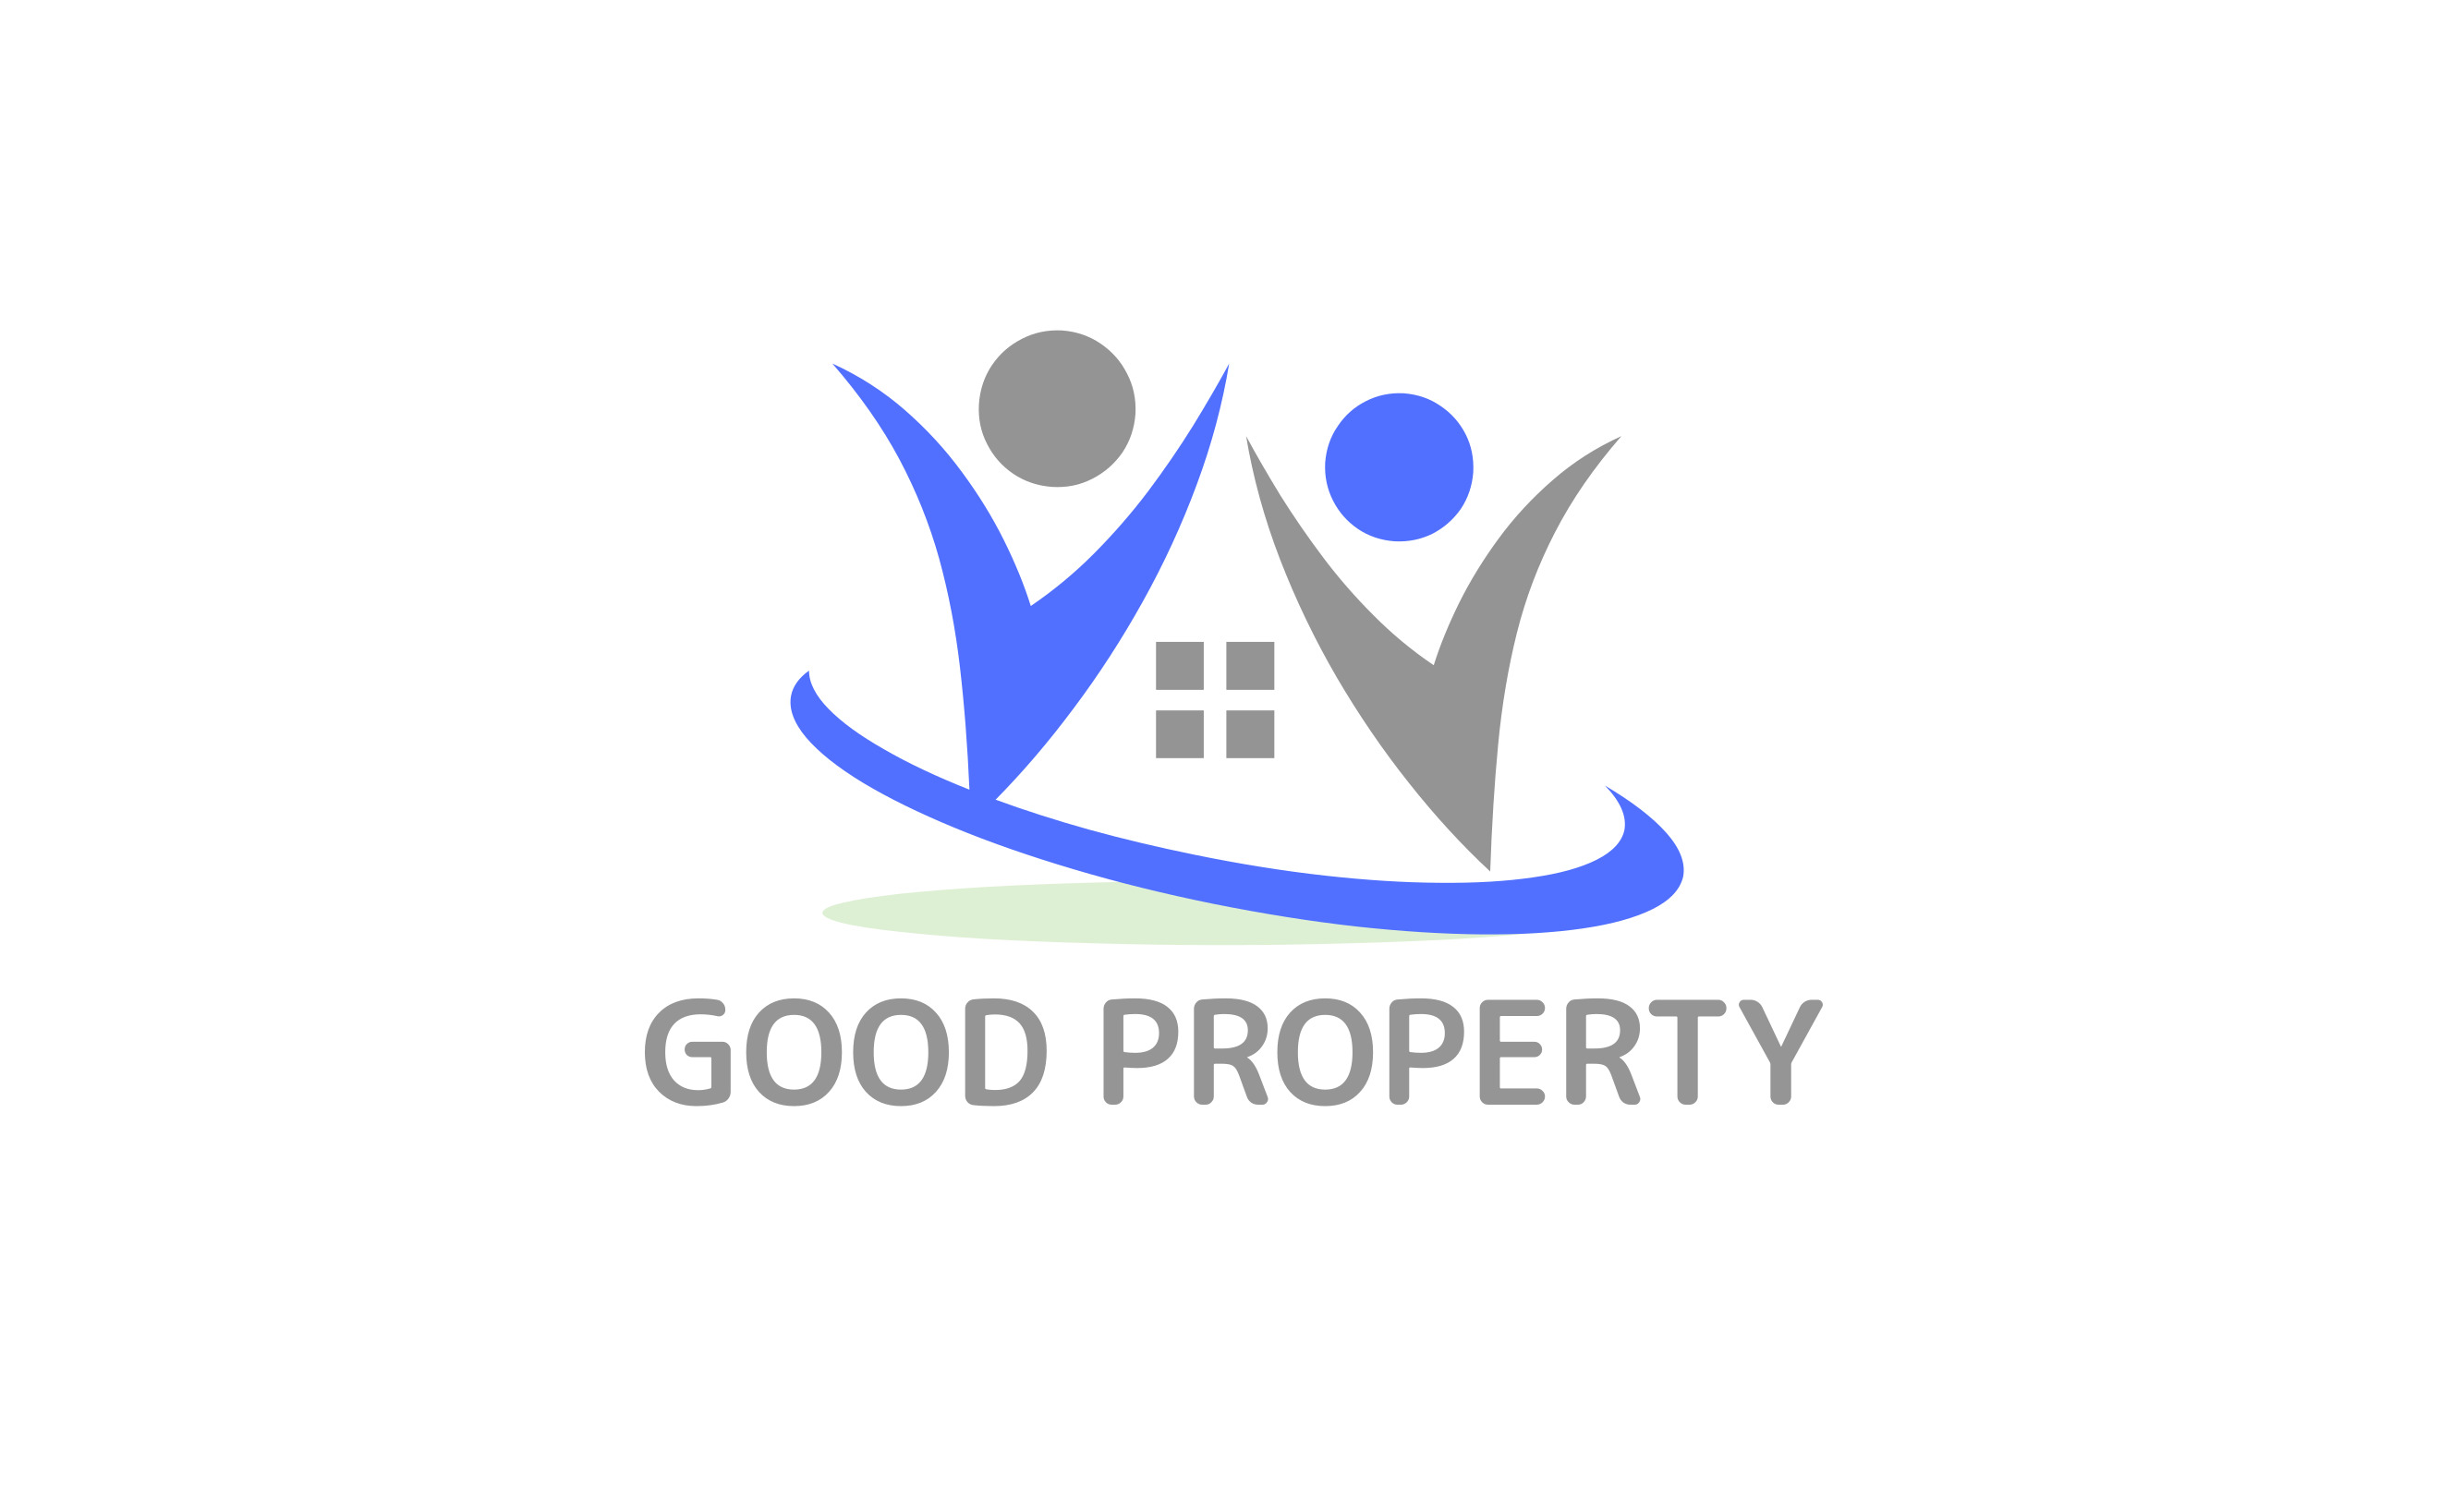 Good Property